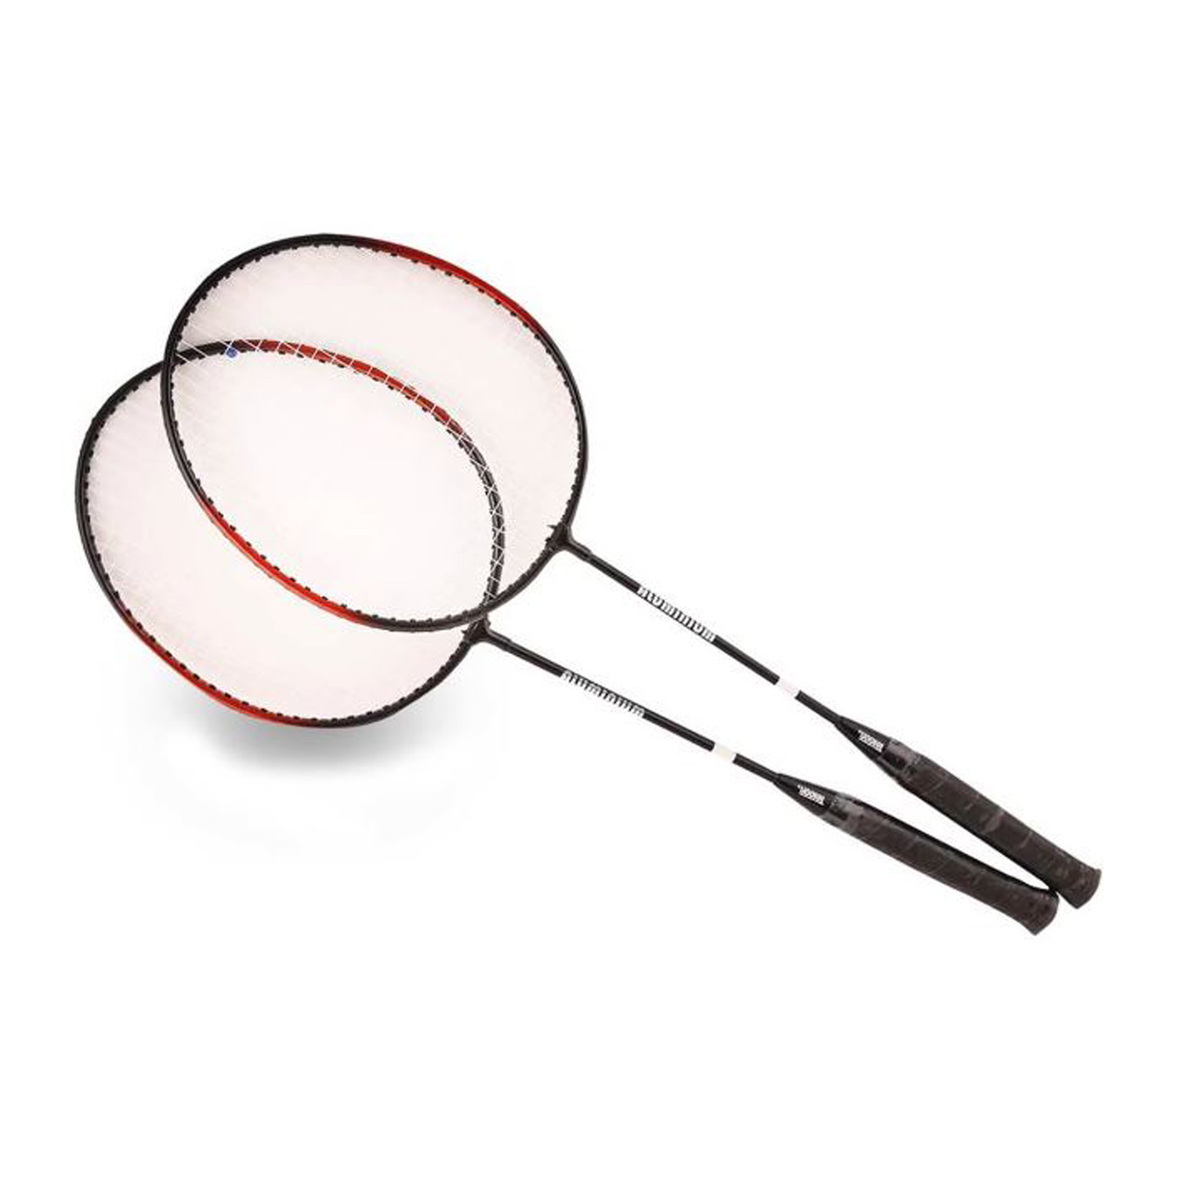 Teloon Badminton Racket TL-7003 Assorted